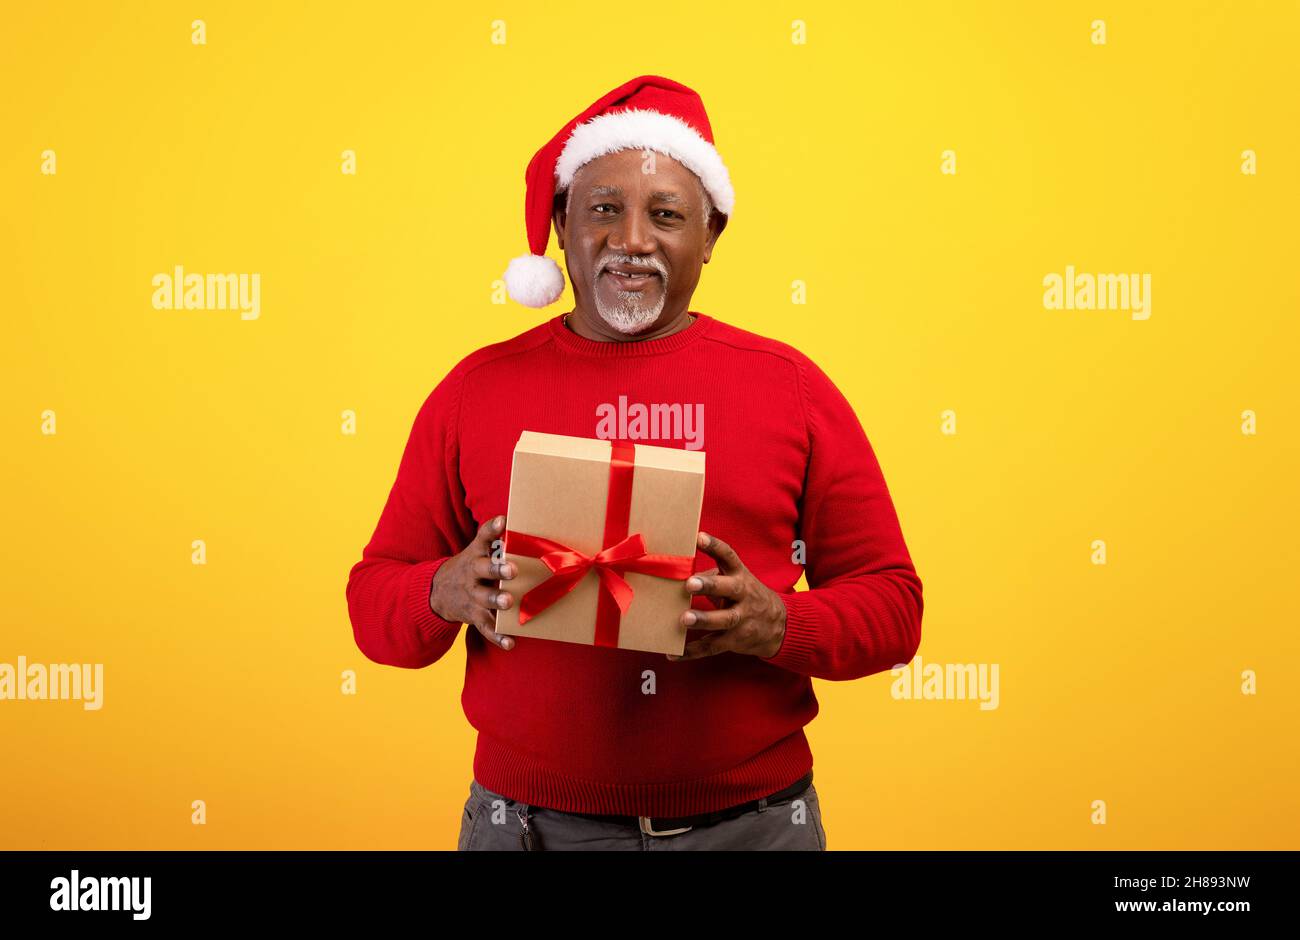 Positive senior black man holding wrapped Xmas gift box, wearing Santa hat and red sweater on orange background Stock Photo